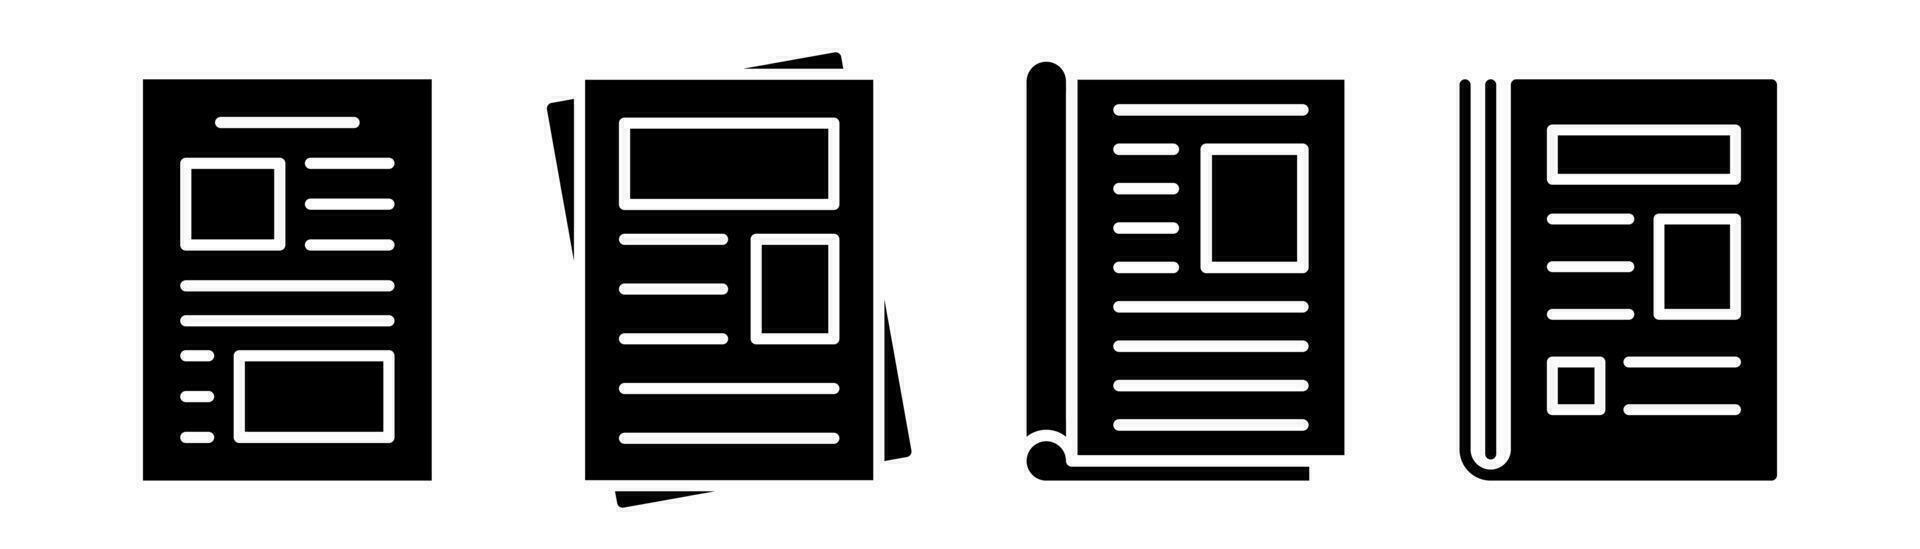 Newspaper icon set. Journal sign in glyph. Black newspaper icon. Magazine icon in glyph. Document symbol. Newspaper in black. Stock vector